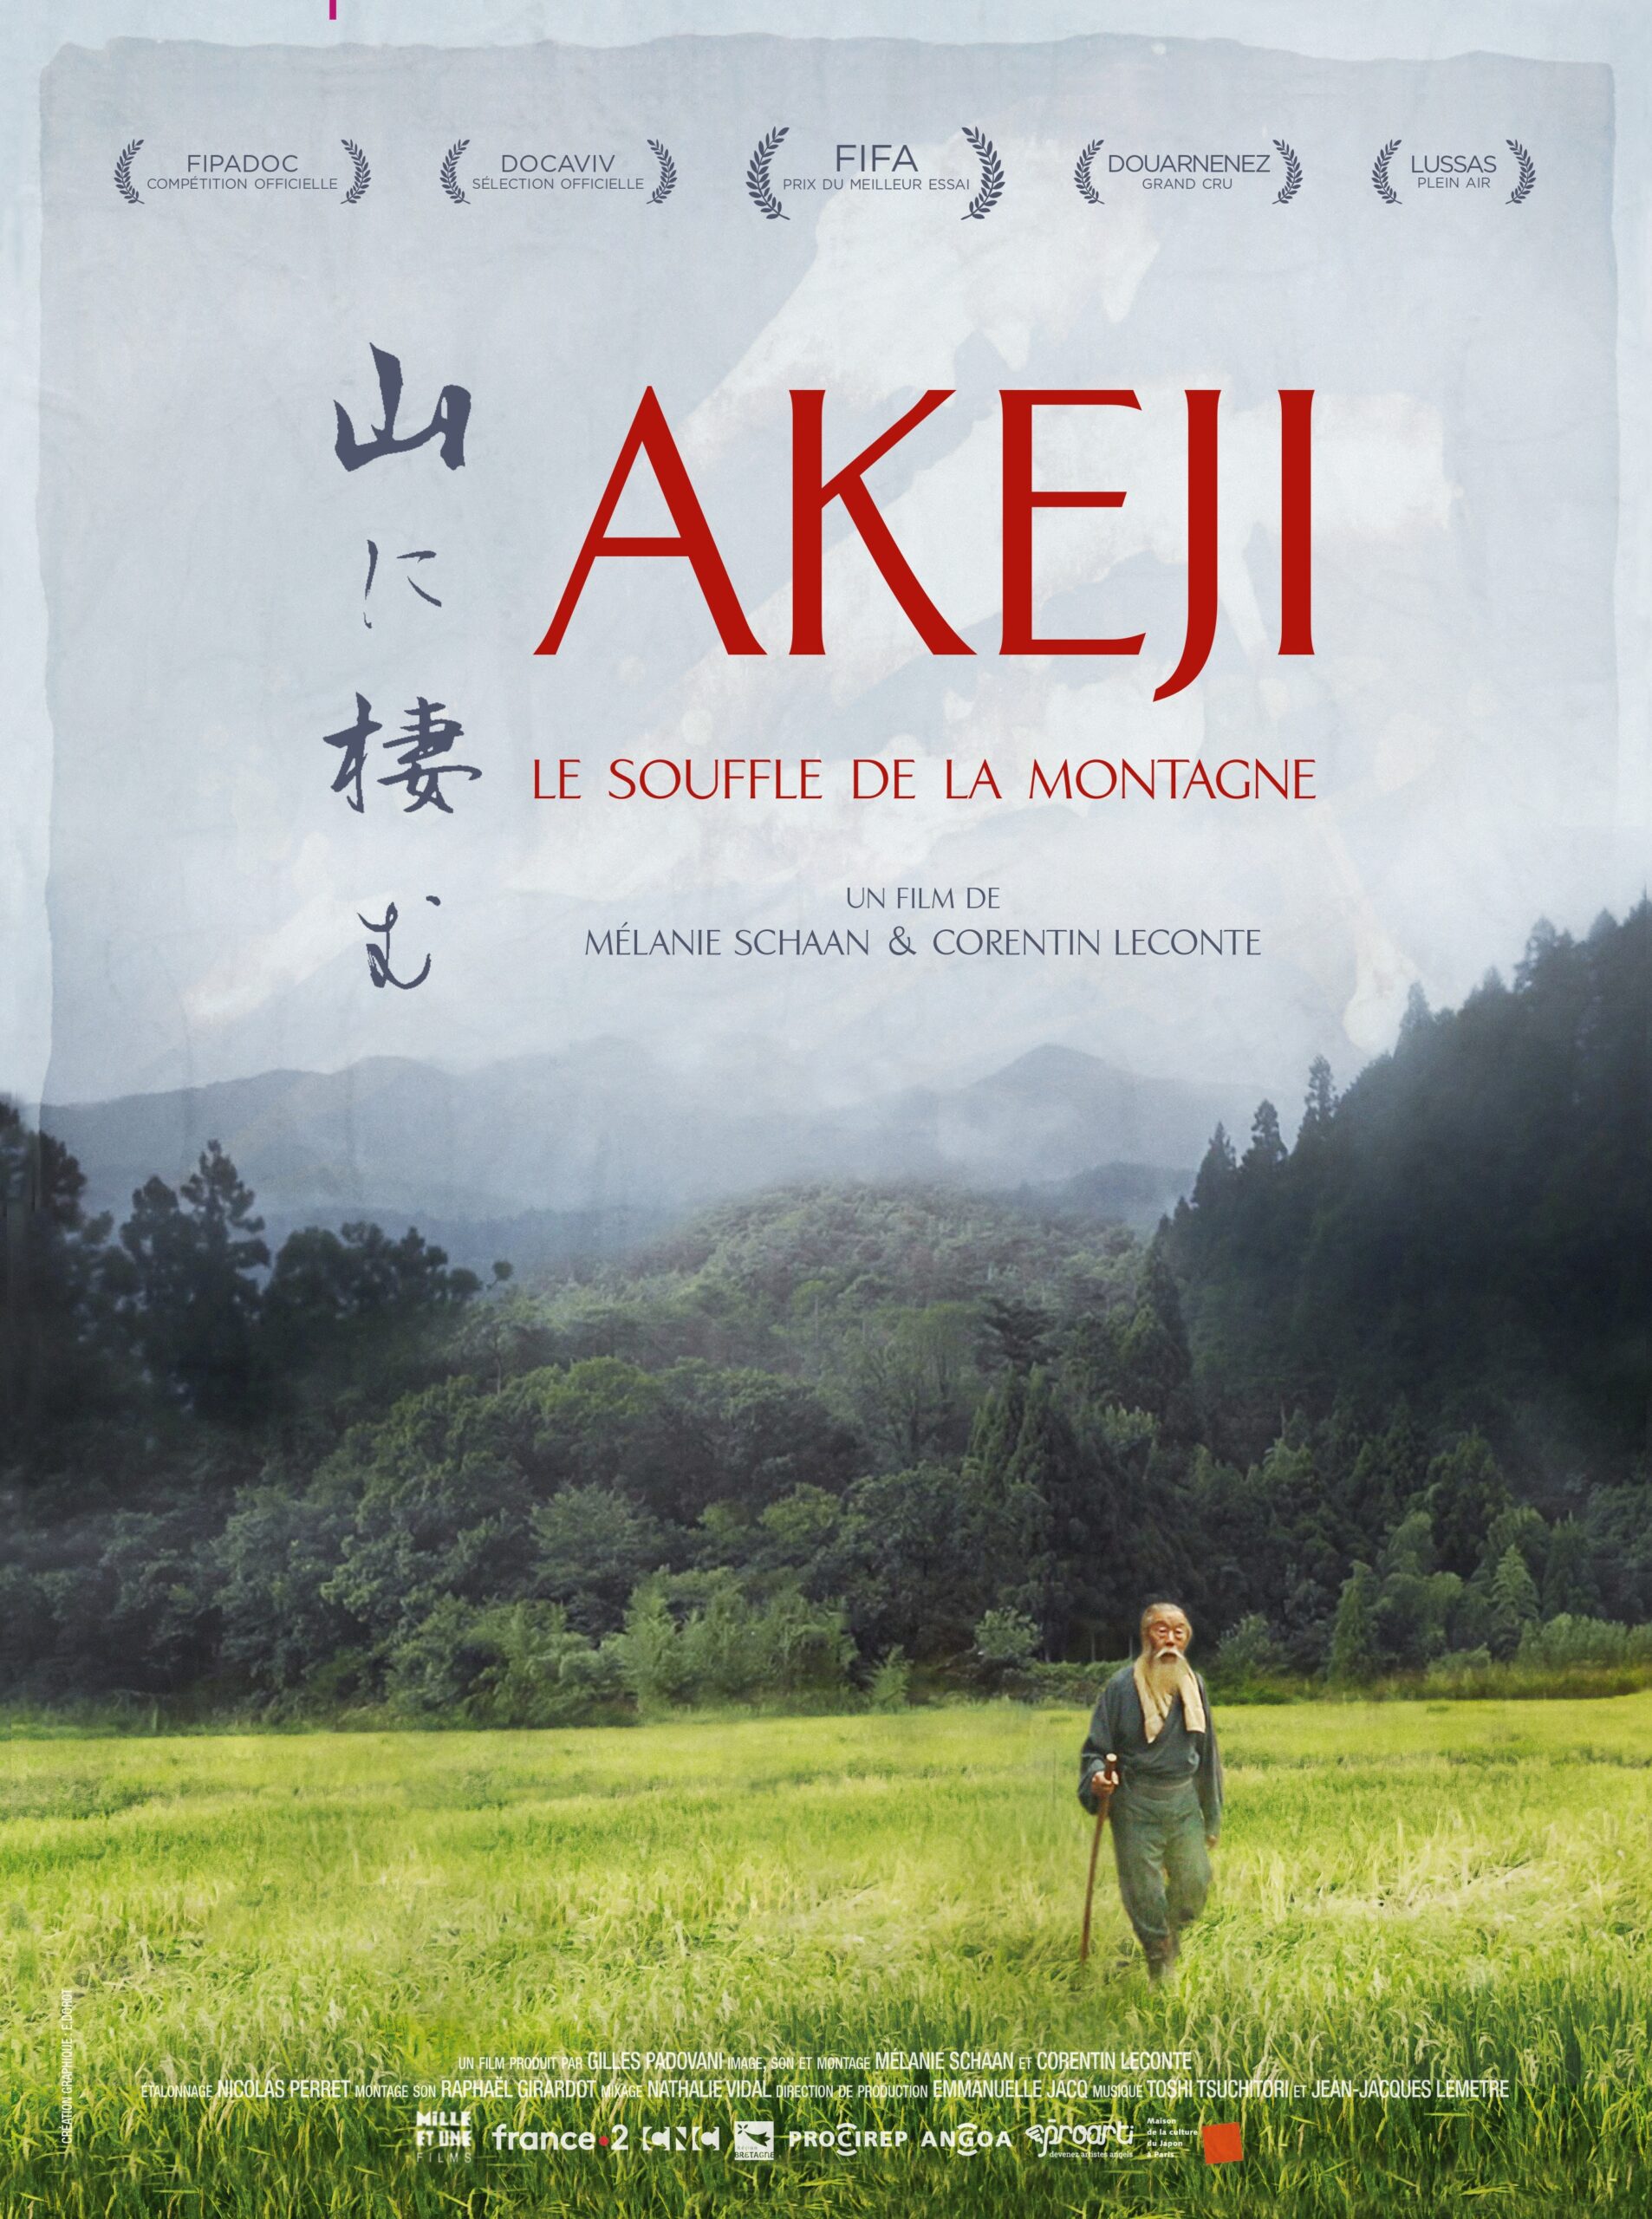 Akeji, le souffle de la montagne